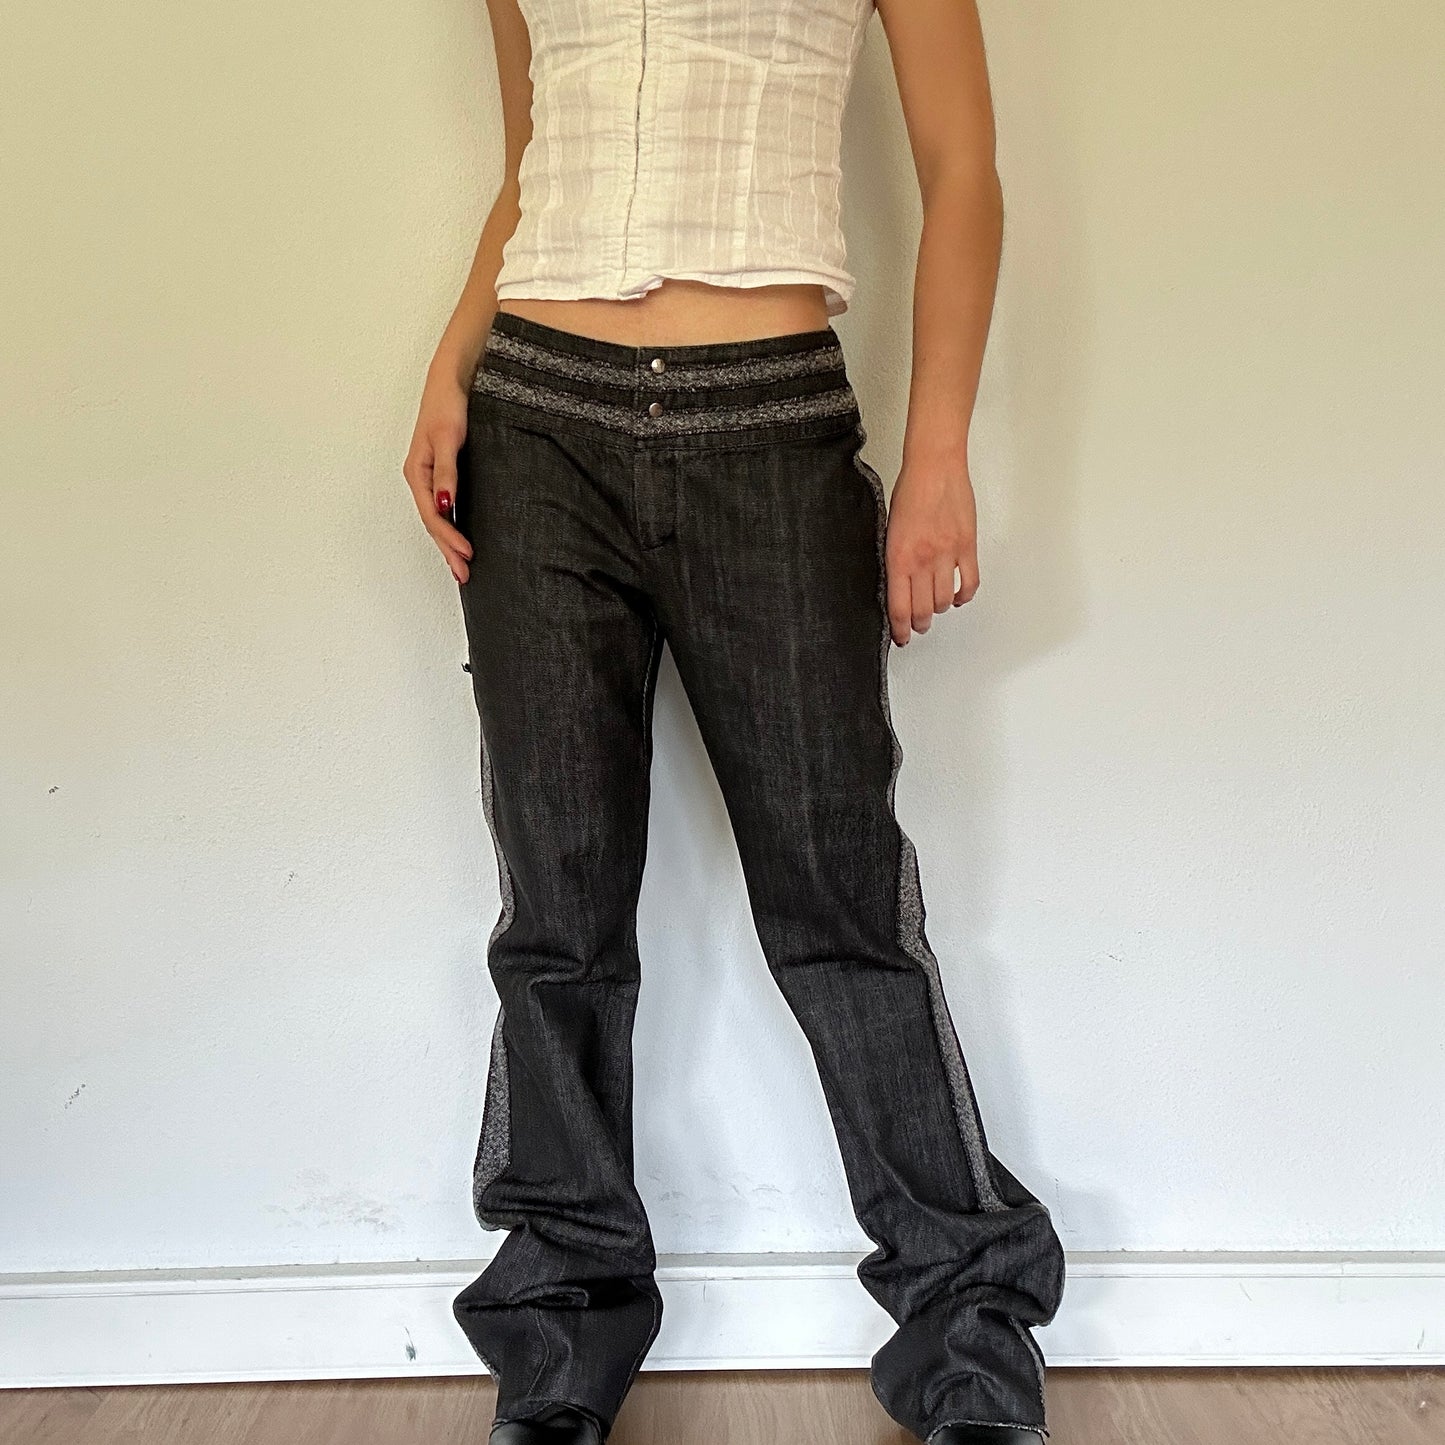 90s Vintage TALL Grey Denim Jeans